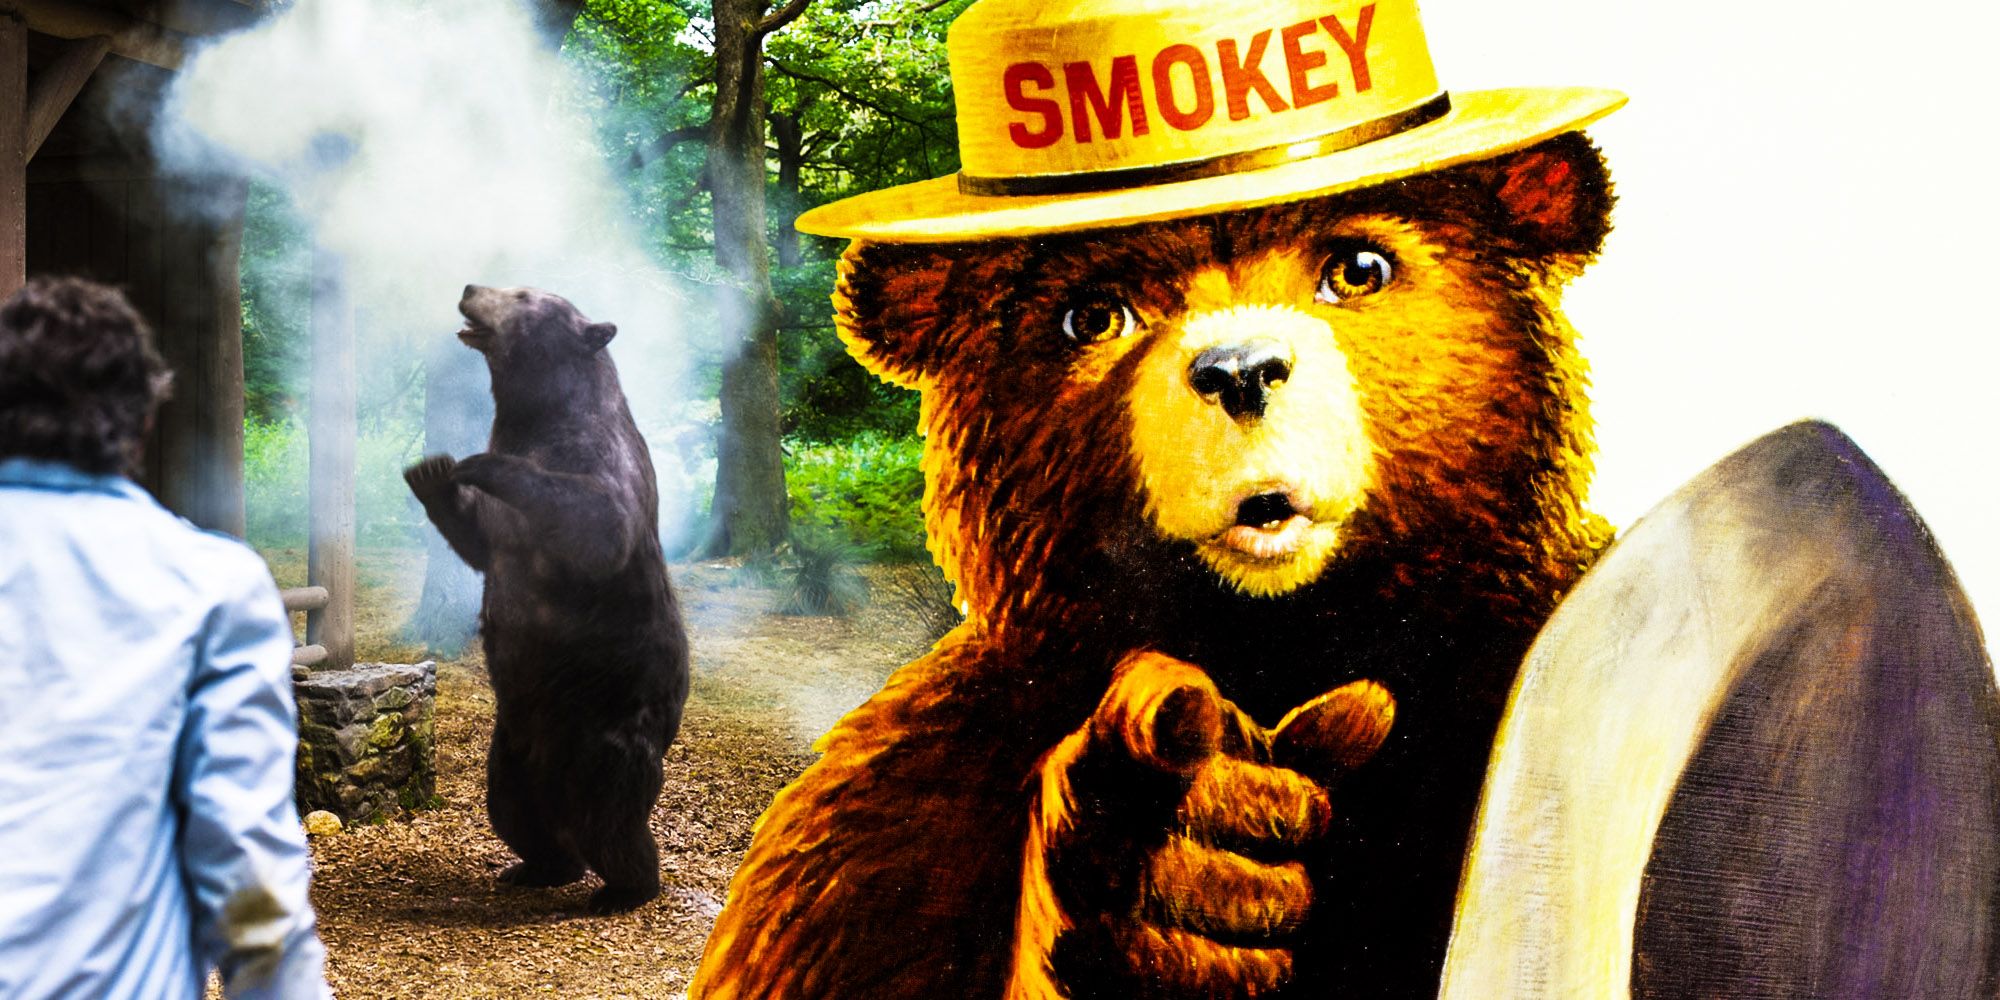 Smokey the bear cocaine bear